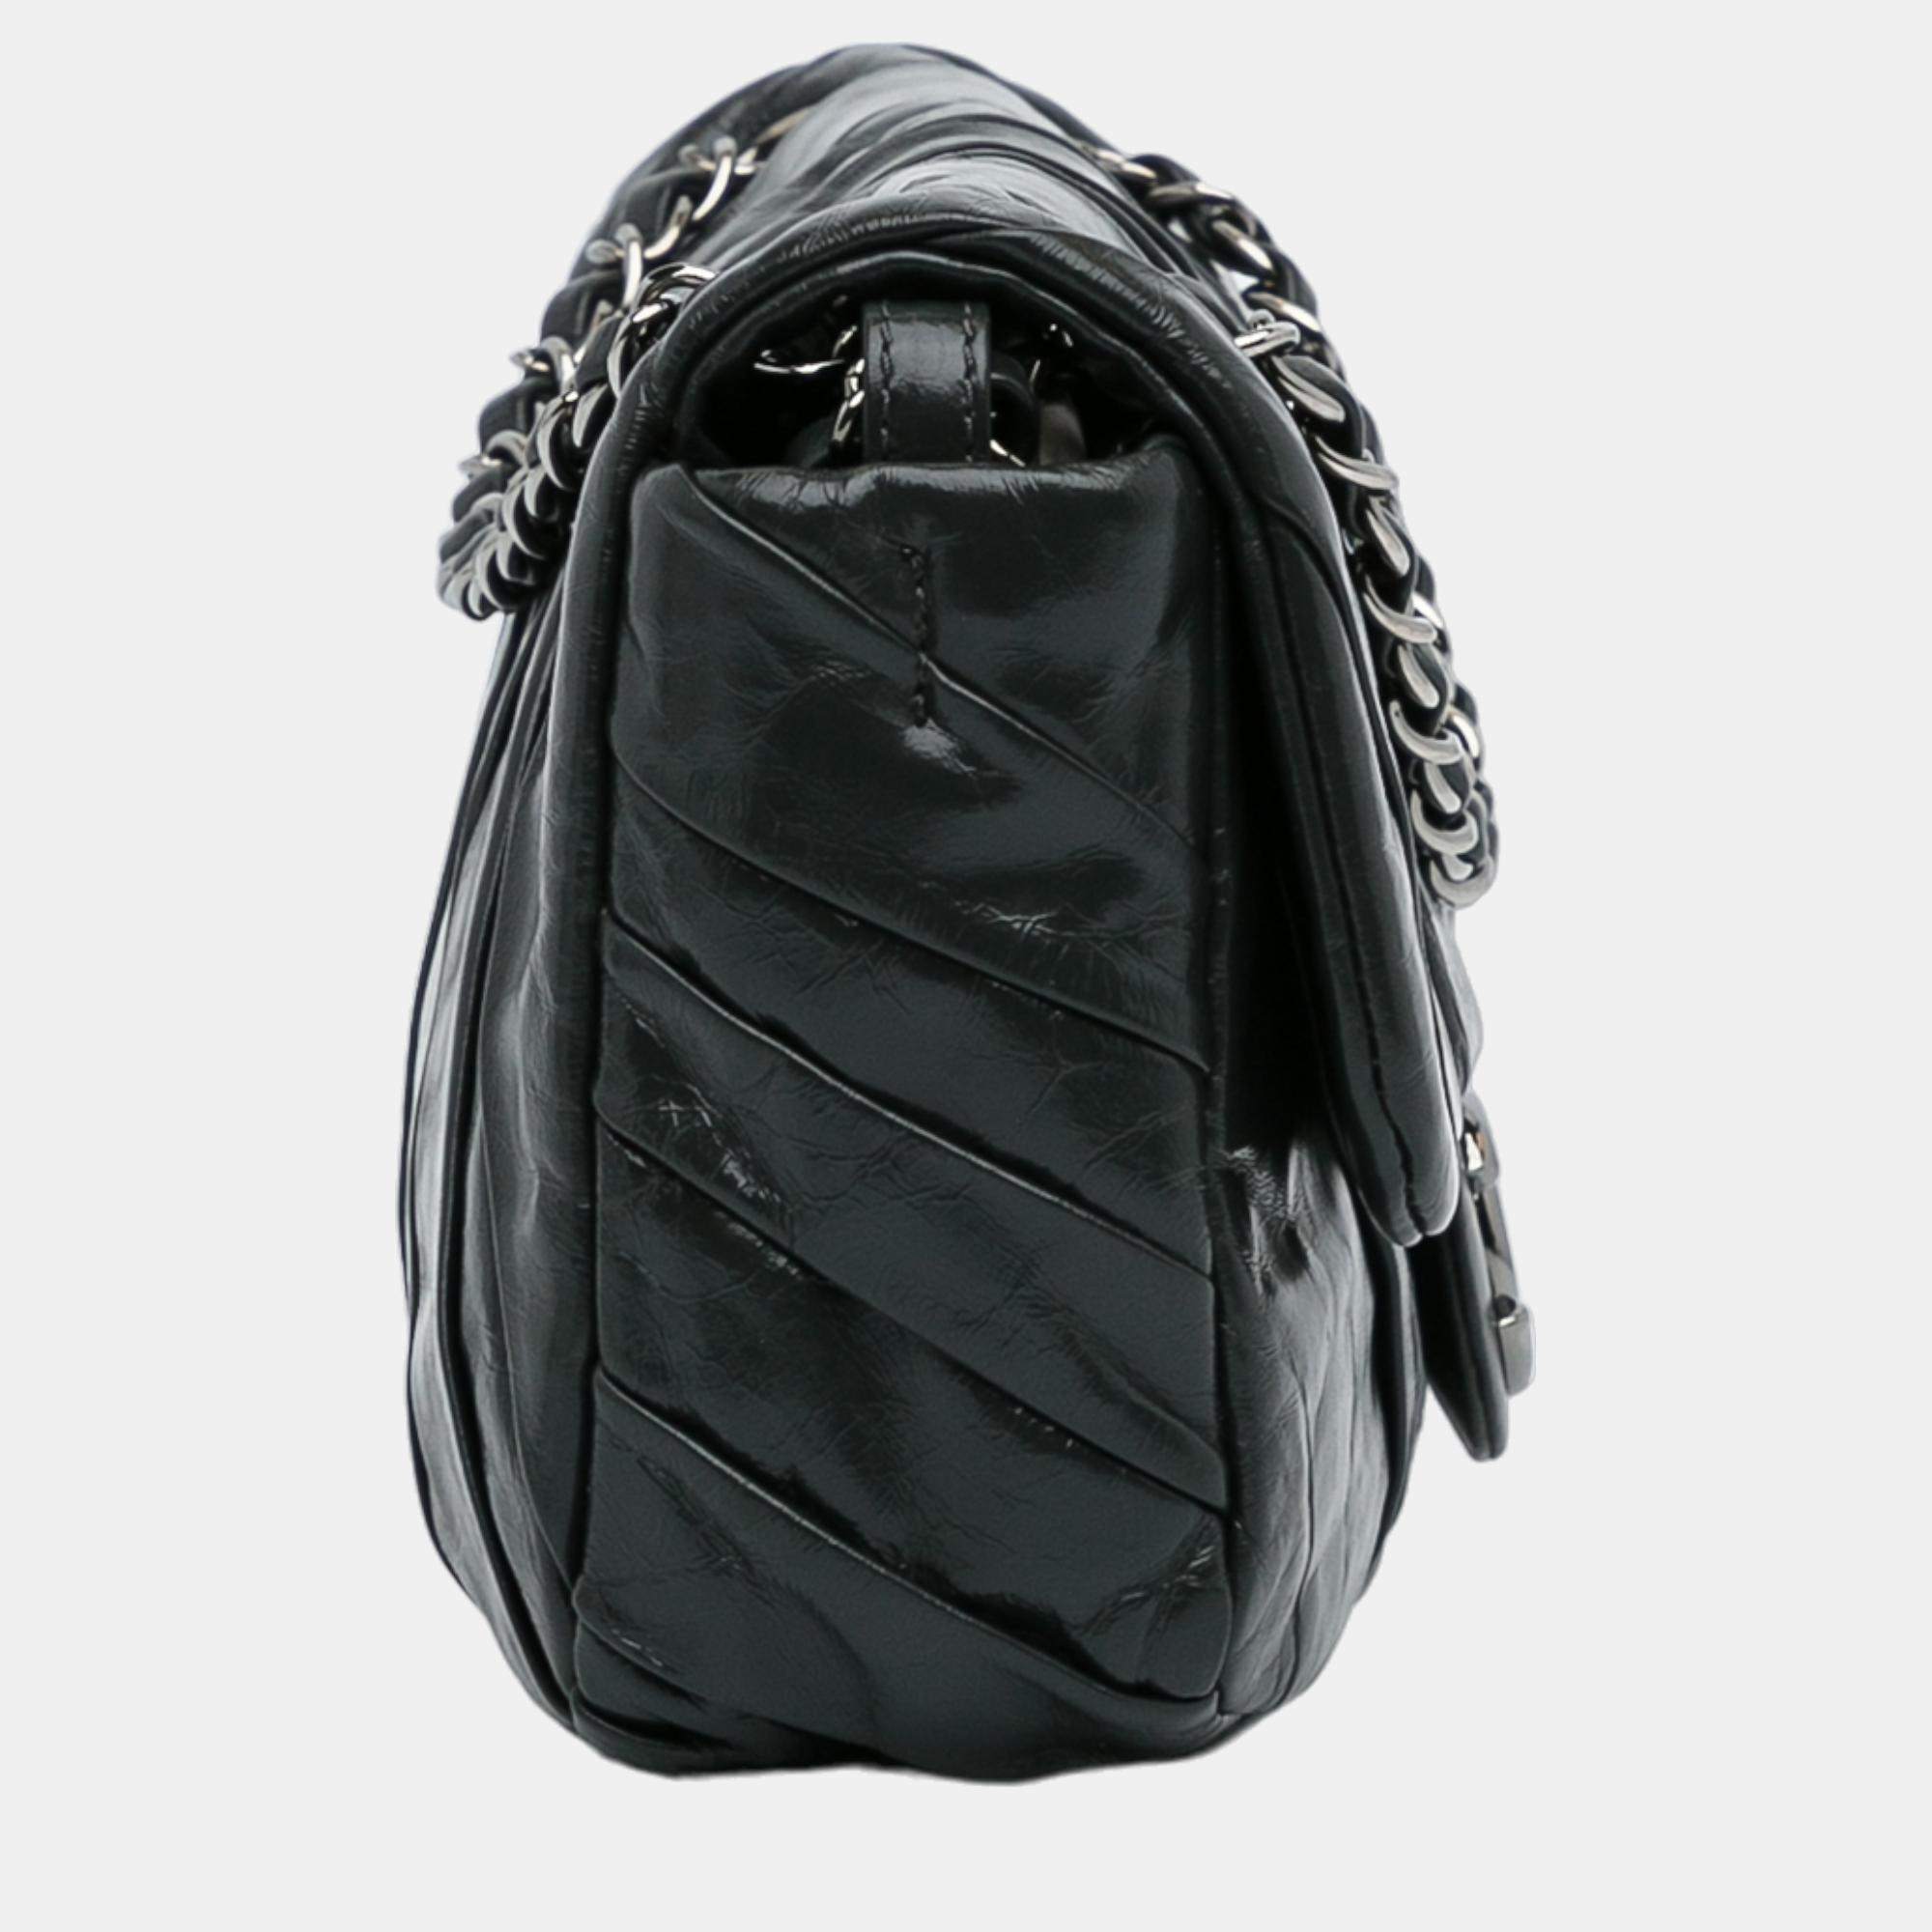 Chanel Black Twisted Flap Bag